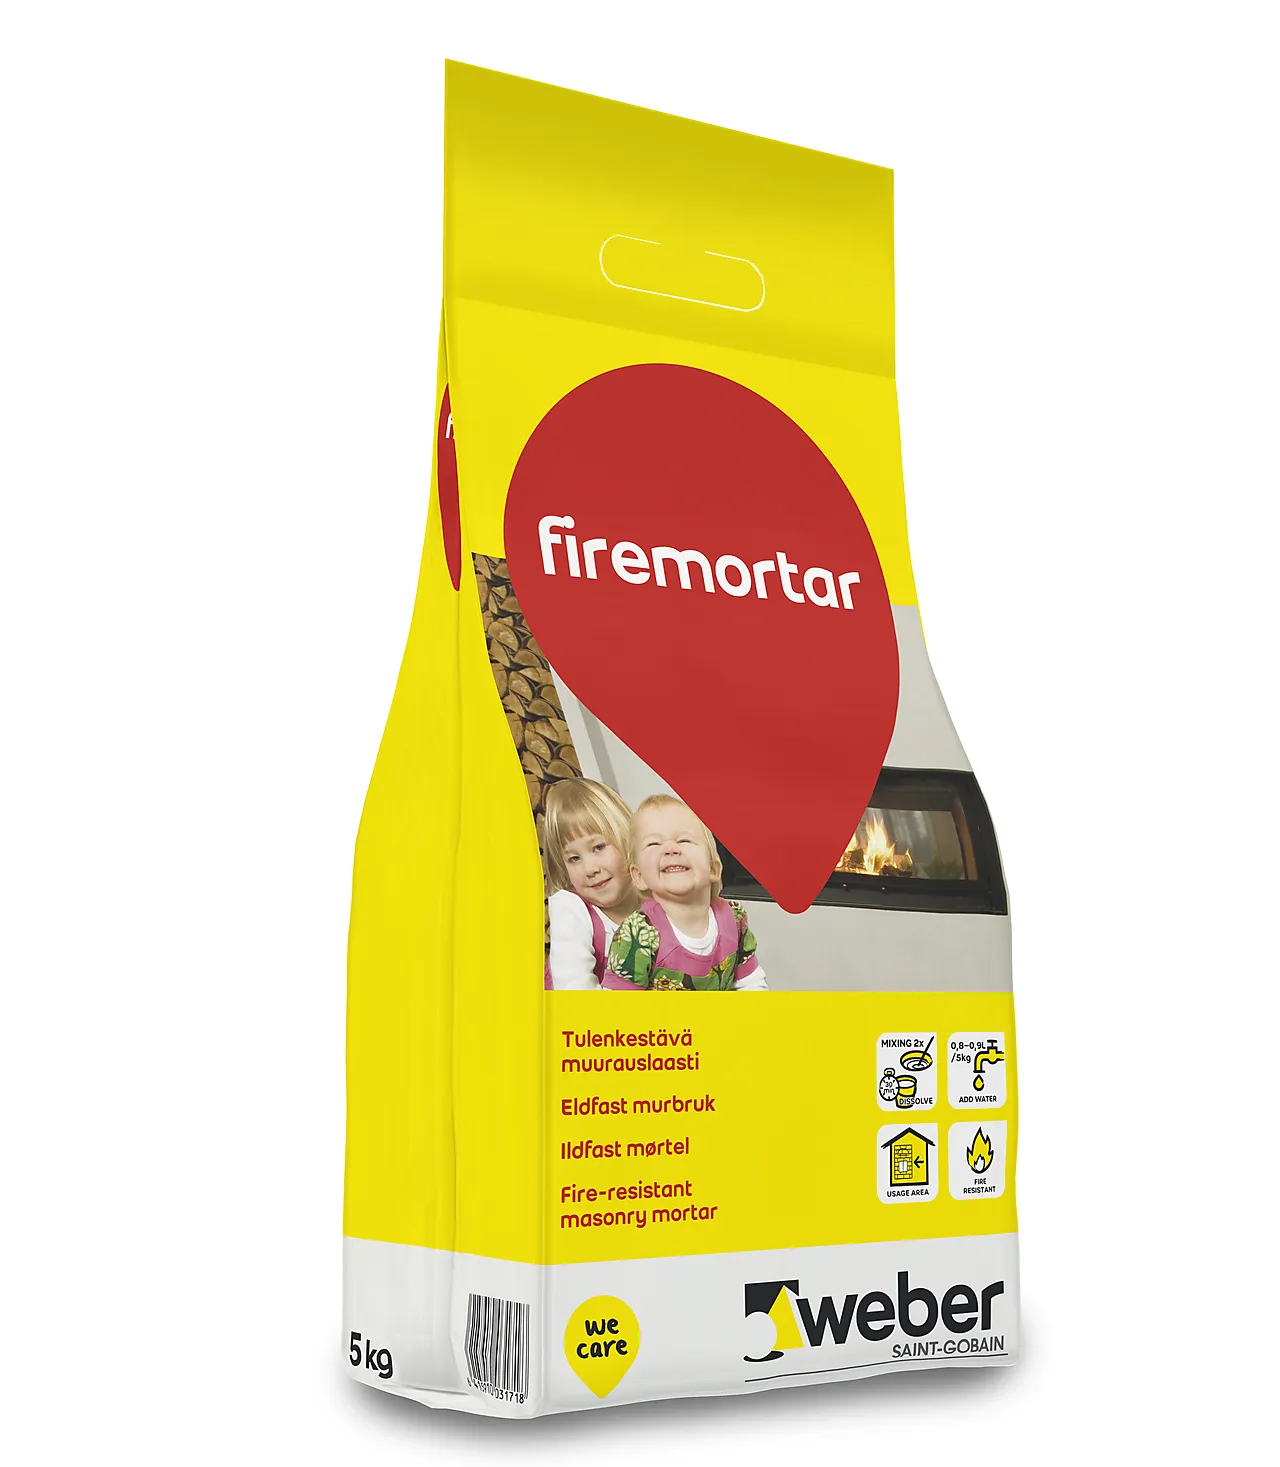 Weber firemortar 5kg ildfast mørtel